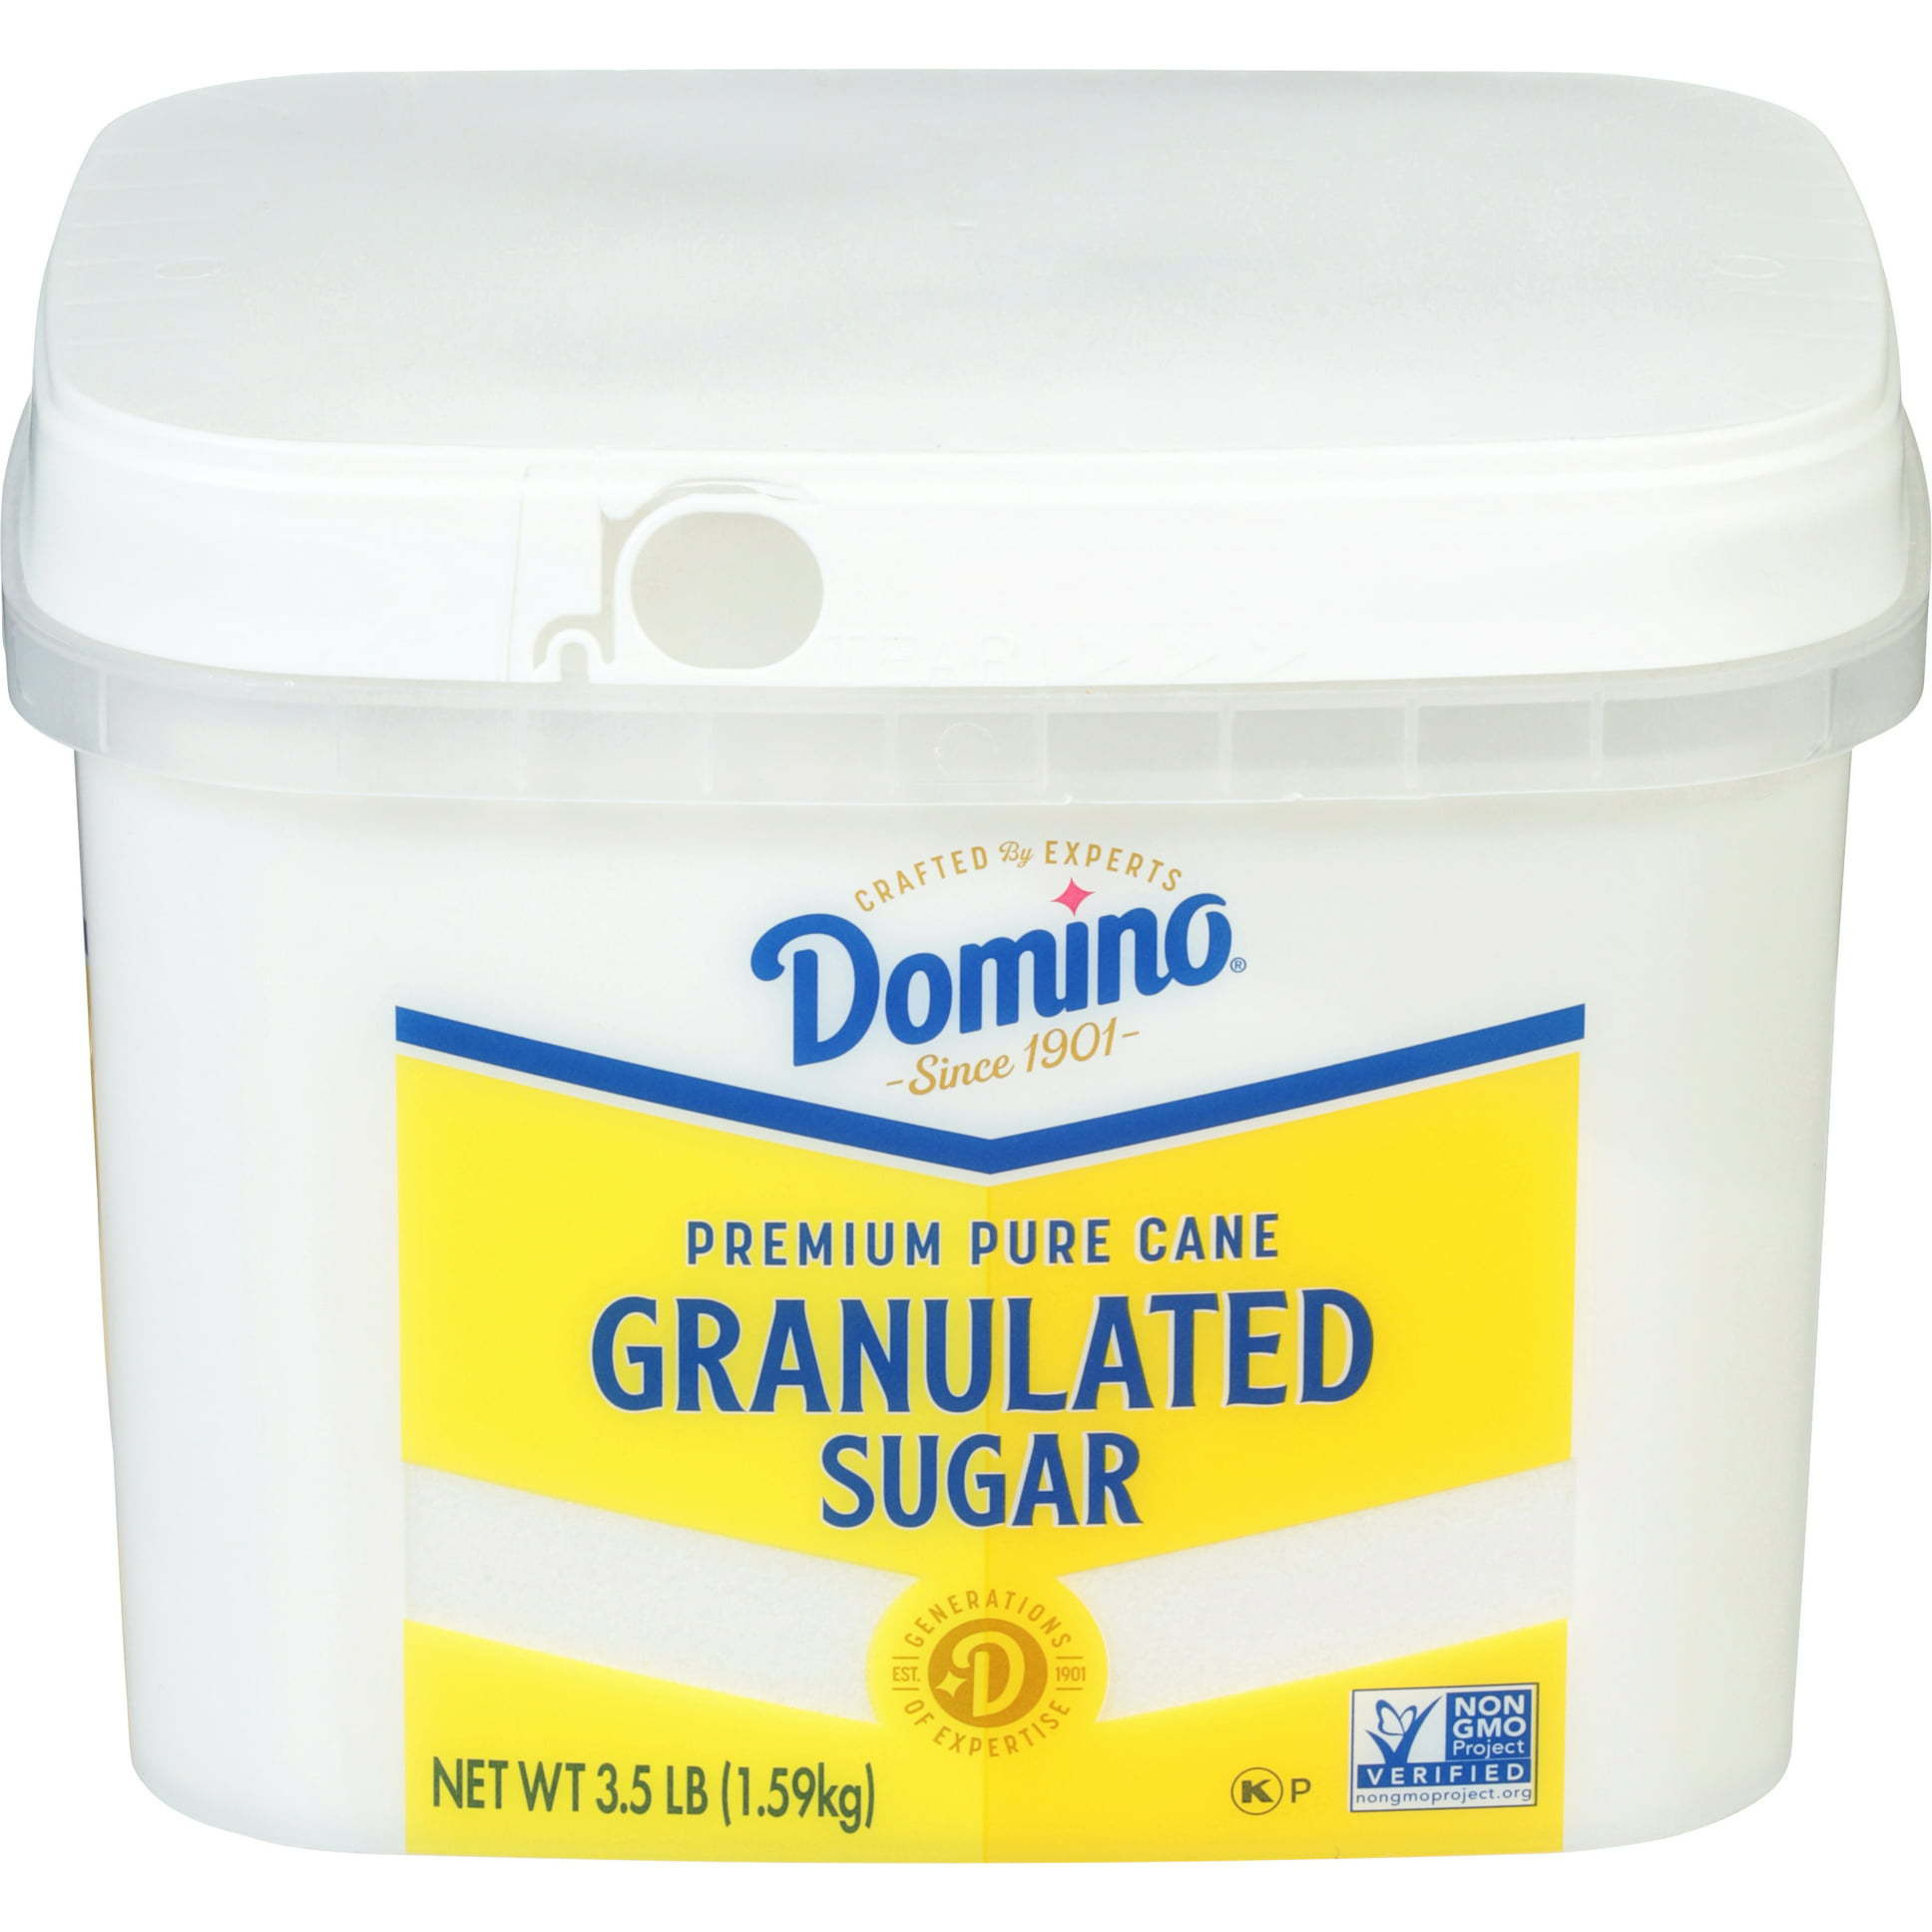 Domino Pure Cane Granulated Sugar Tub - 3.5 Lb (1.59 Kg)